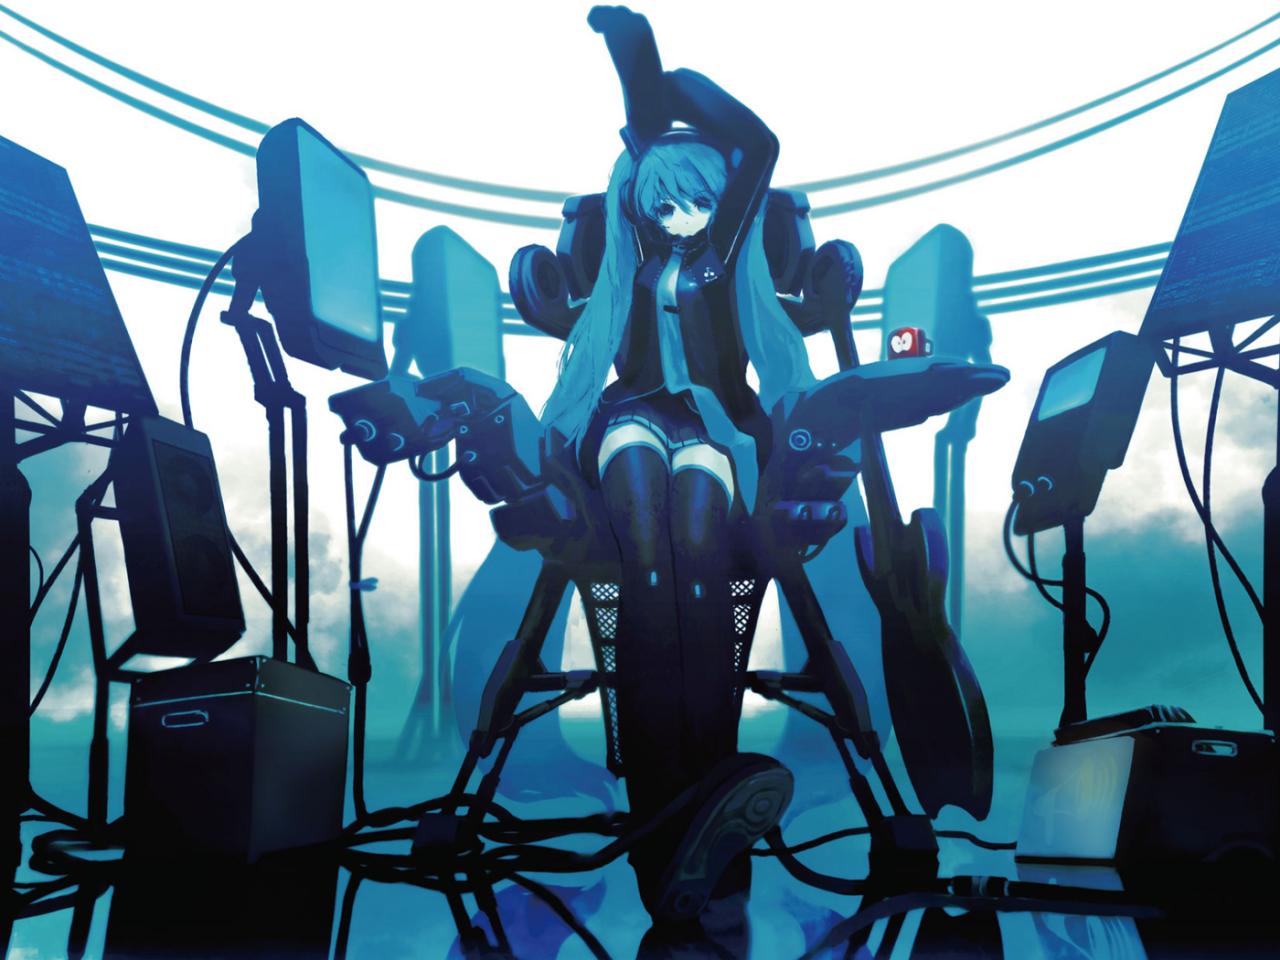 обои Vocaloid - Девушка среди компьютеров фото